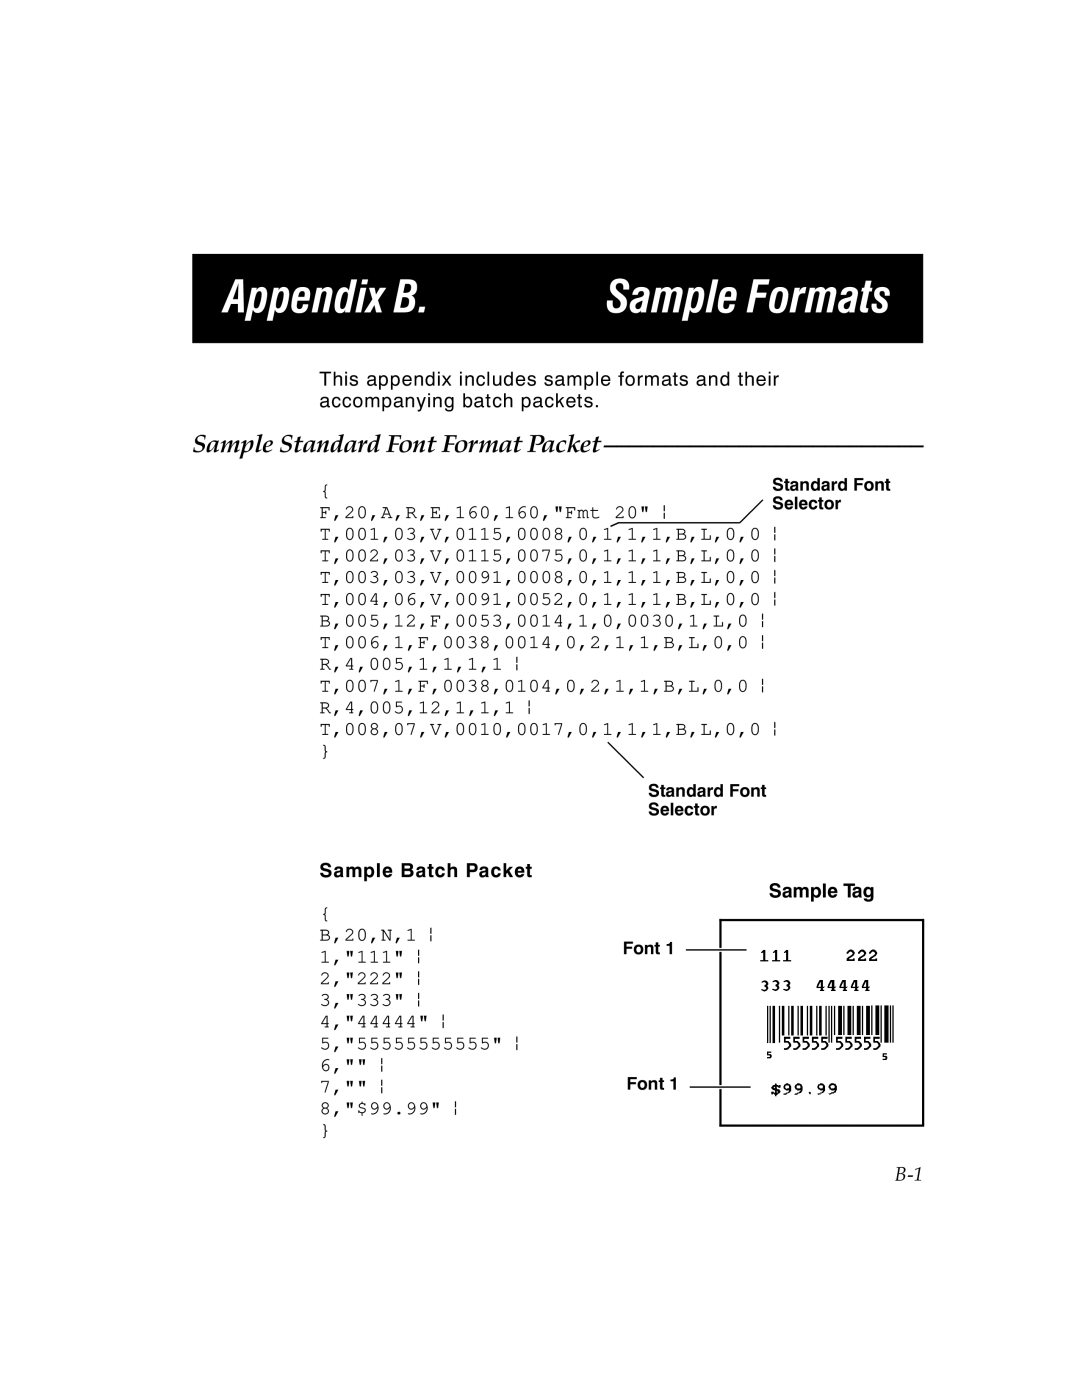 Paxar MPCL II manual Appendix B. Sample Formats, Sample Standard Font Format Packet, Sample Batch Packet, Sample Tag 